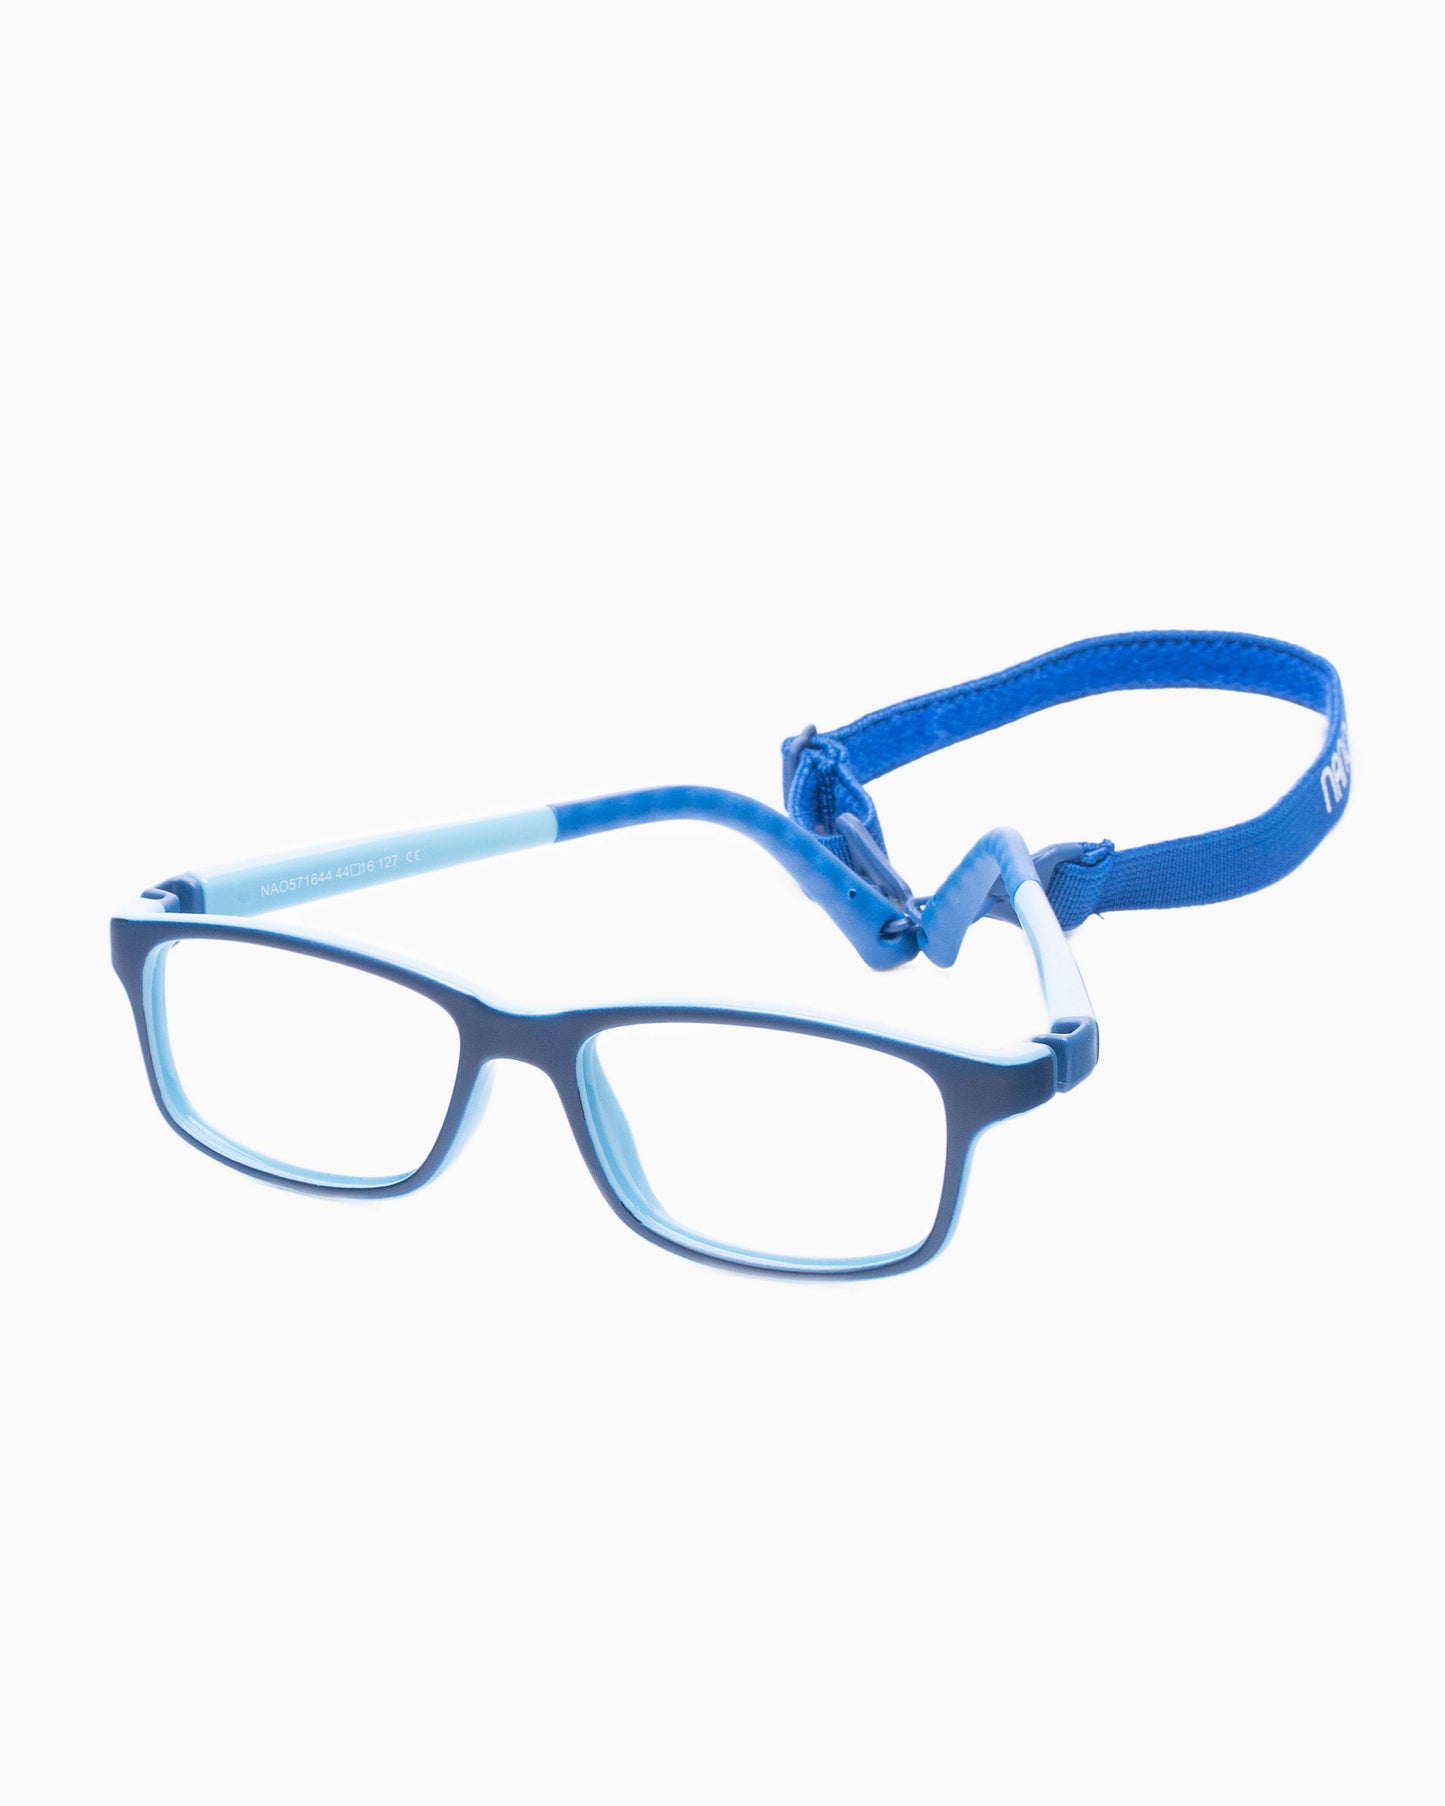 Nanovista Kids - CREW - BLUEBLUE | Bar à lunettes